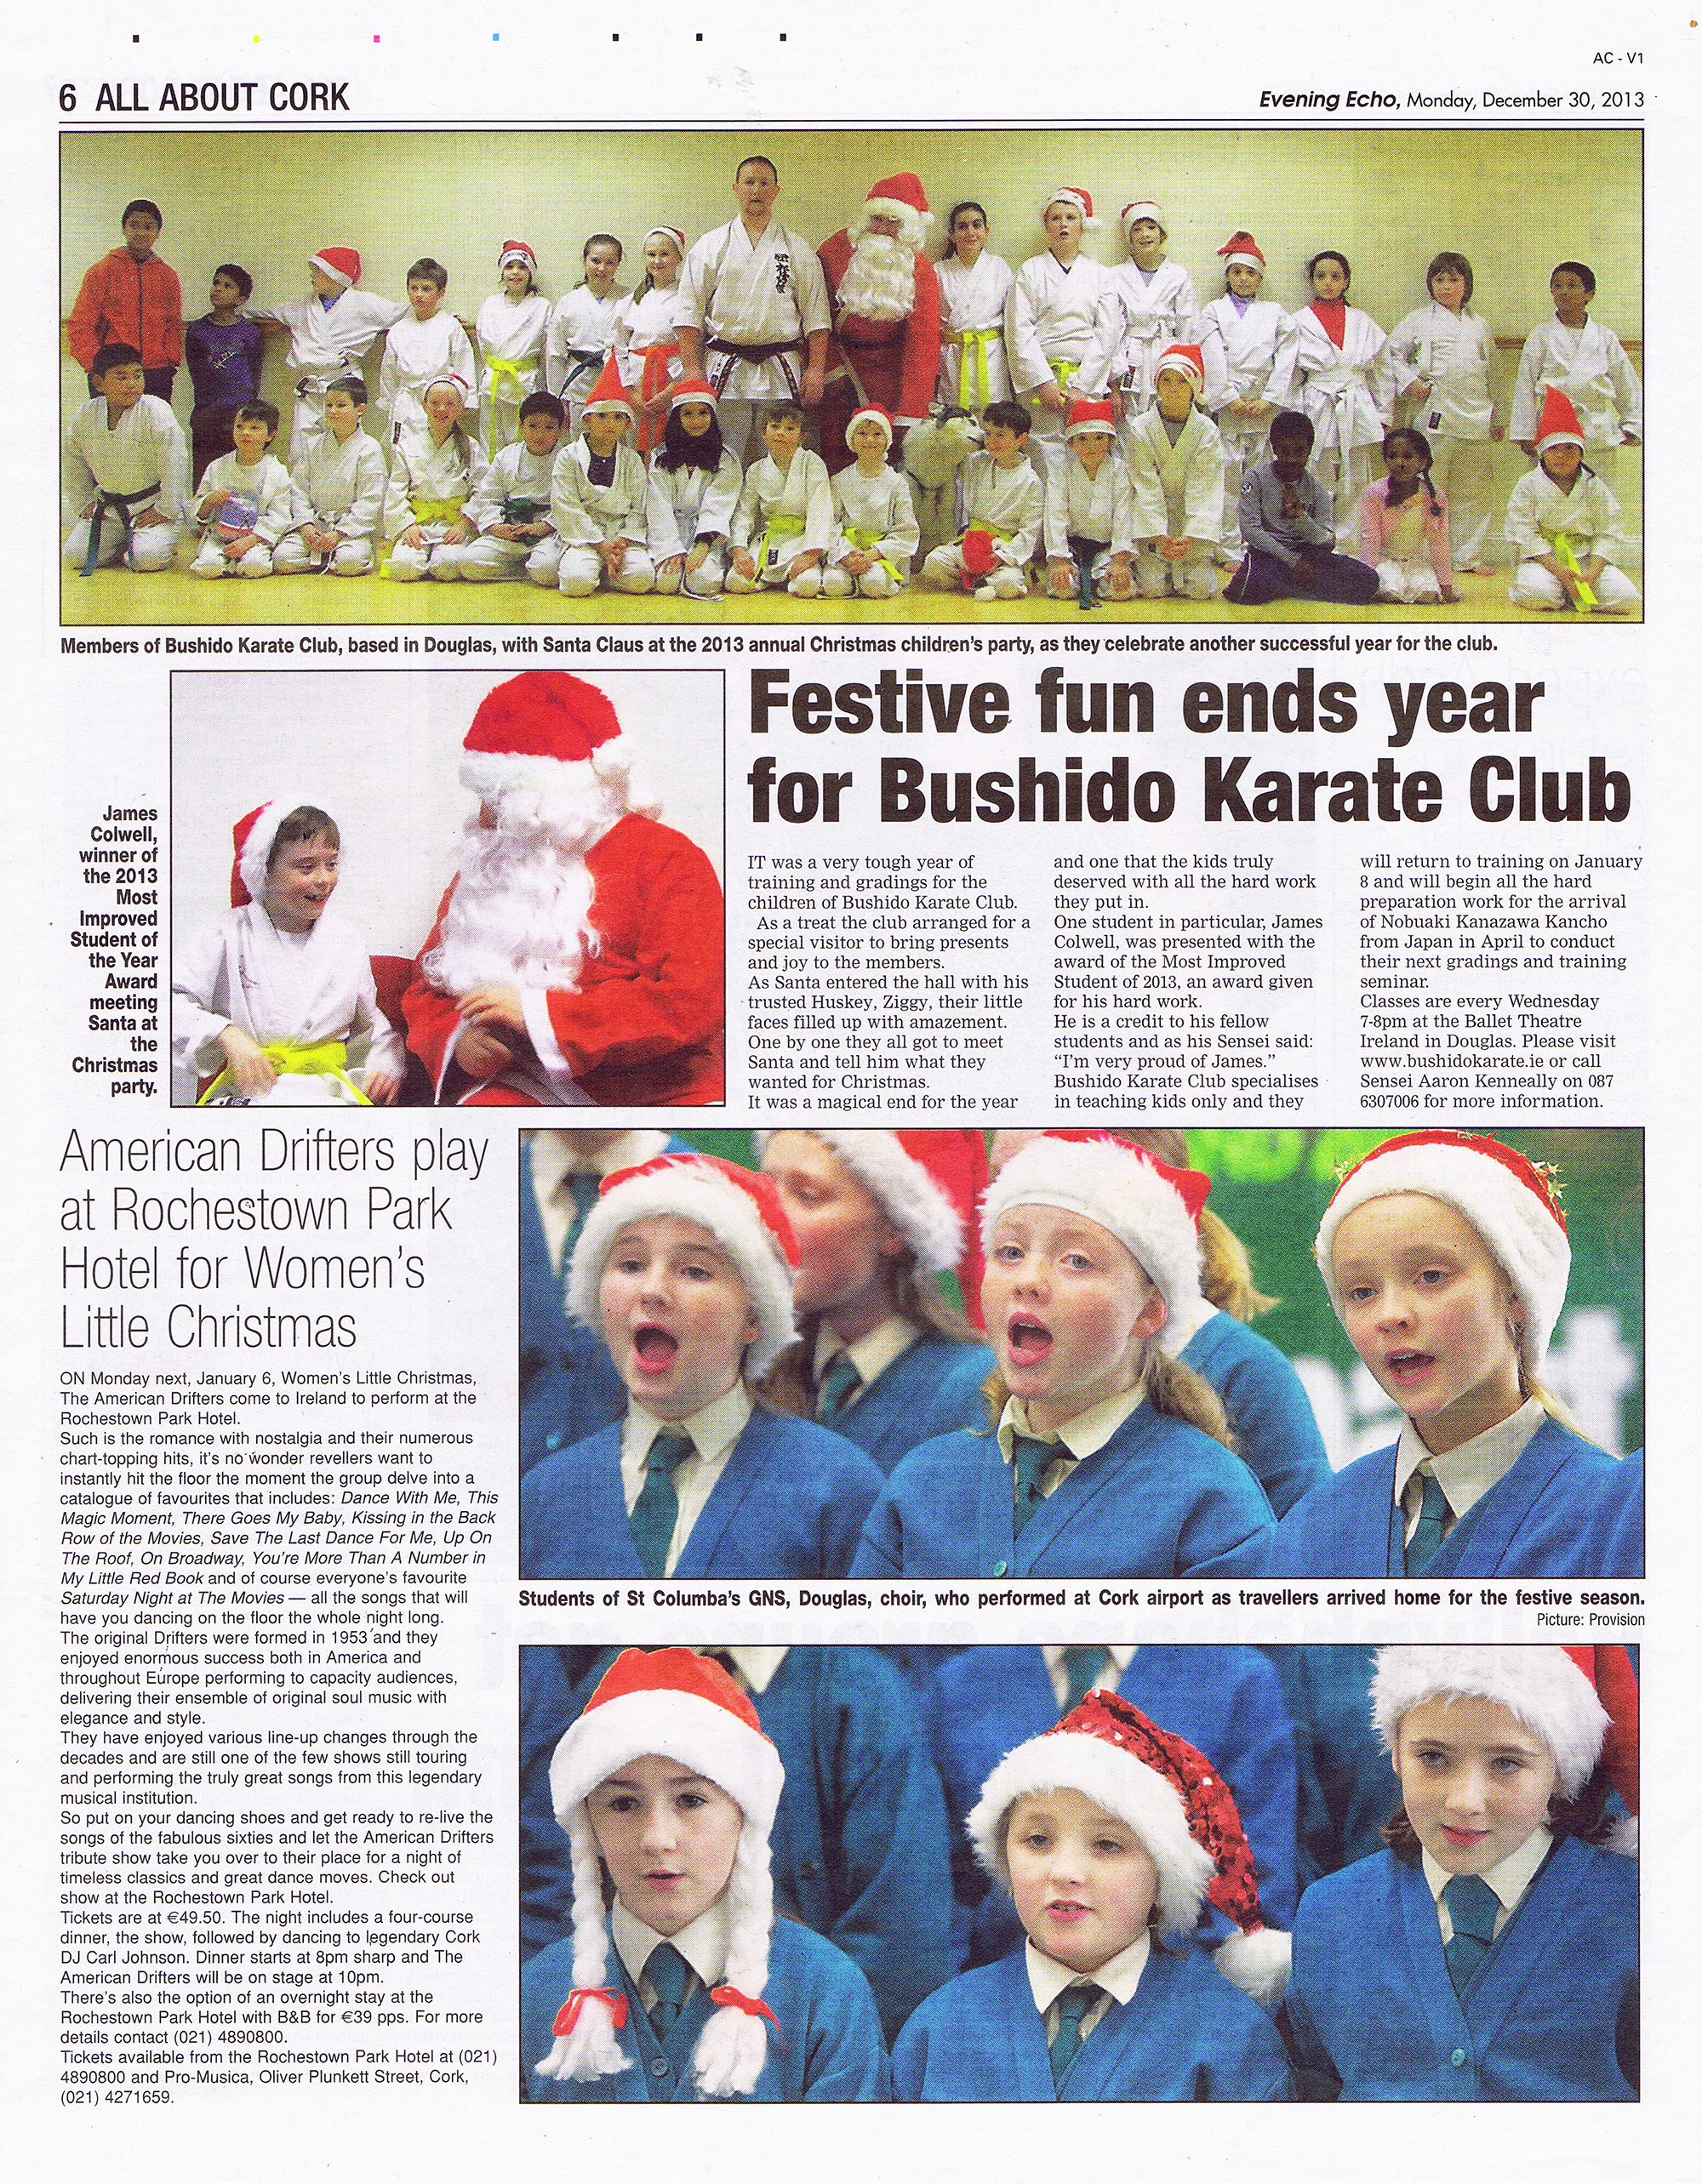 Evening Echo Feature - Festive fun ends year for Bushido Karate Club